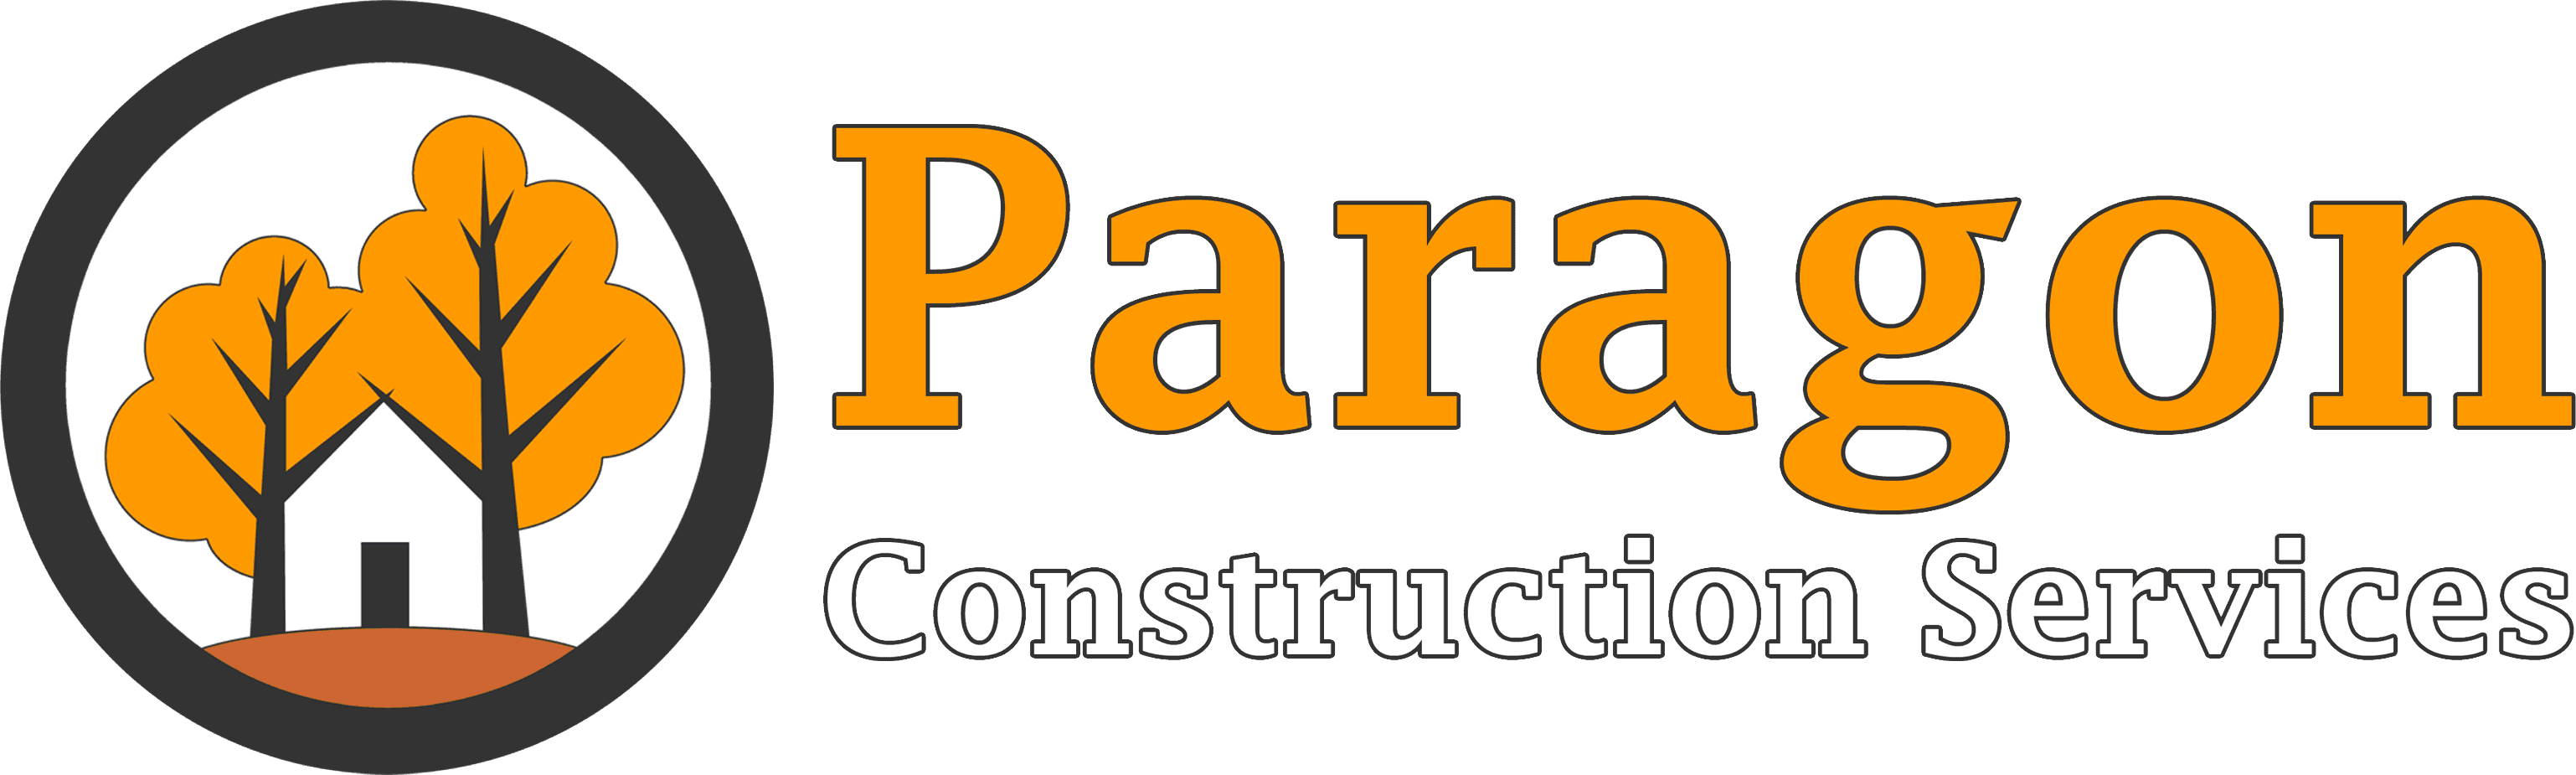 Paragon Construction Services